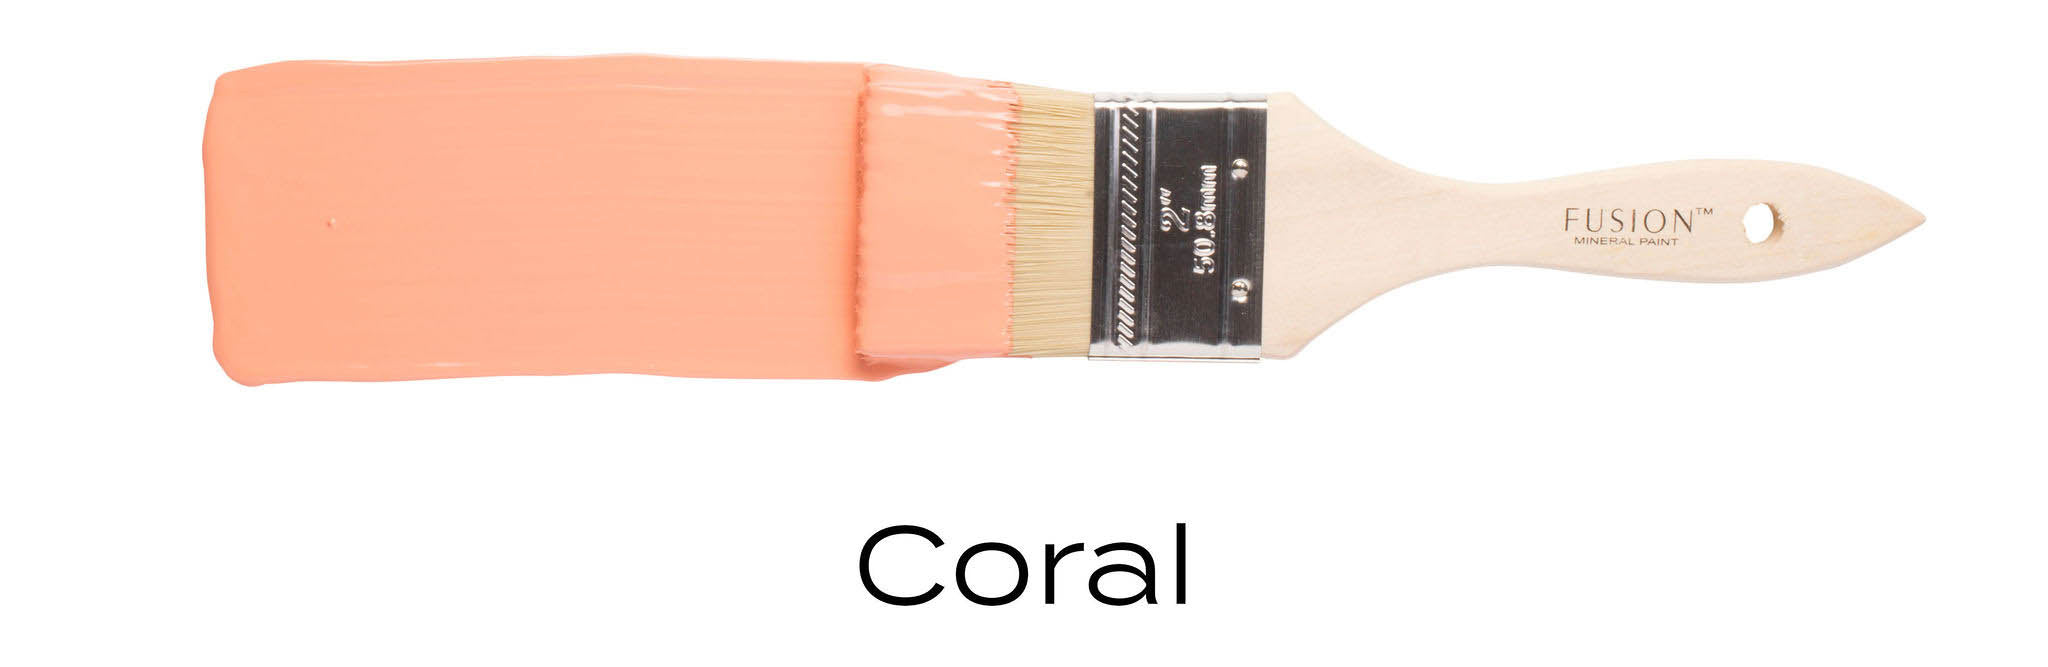 Coral colour furniture paint by fusion mineral paints